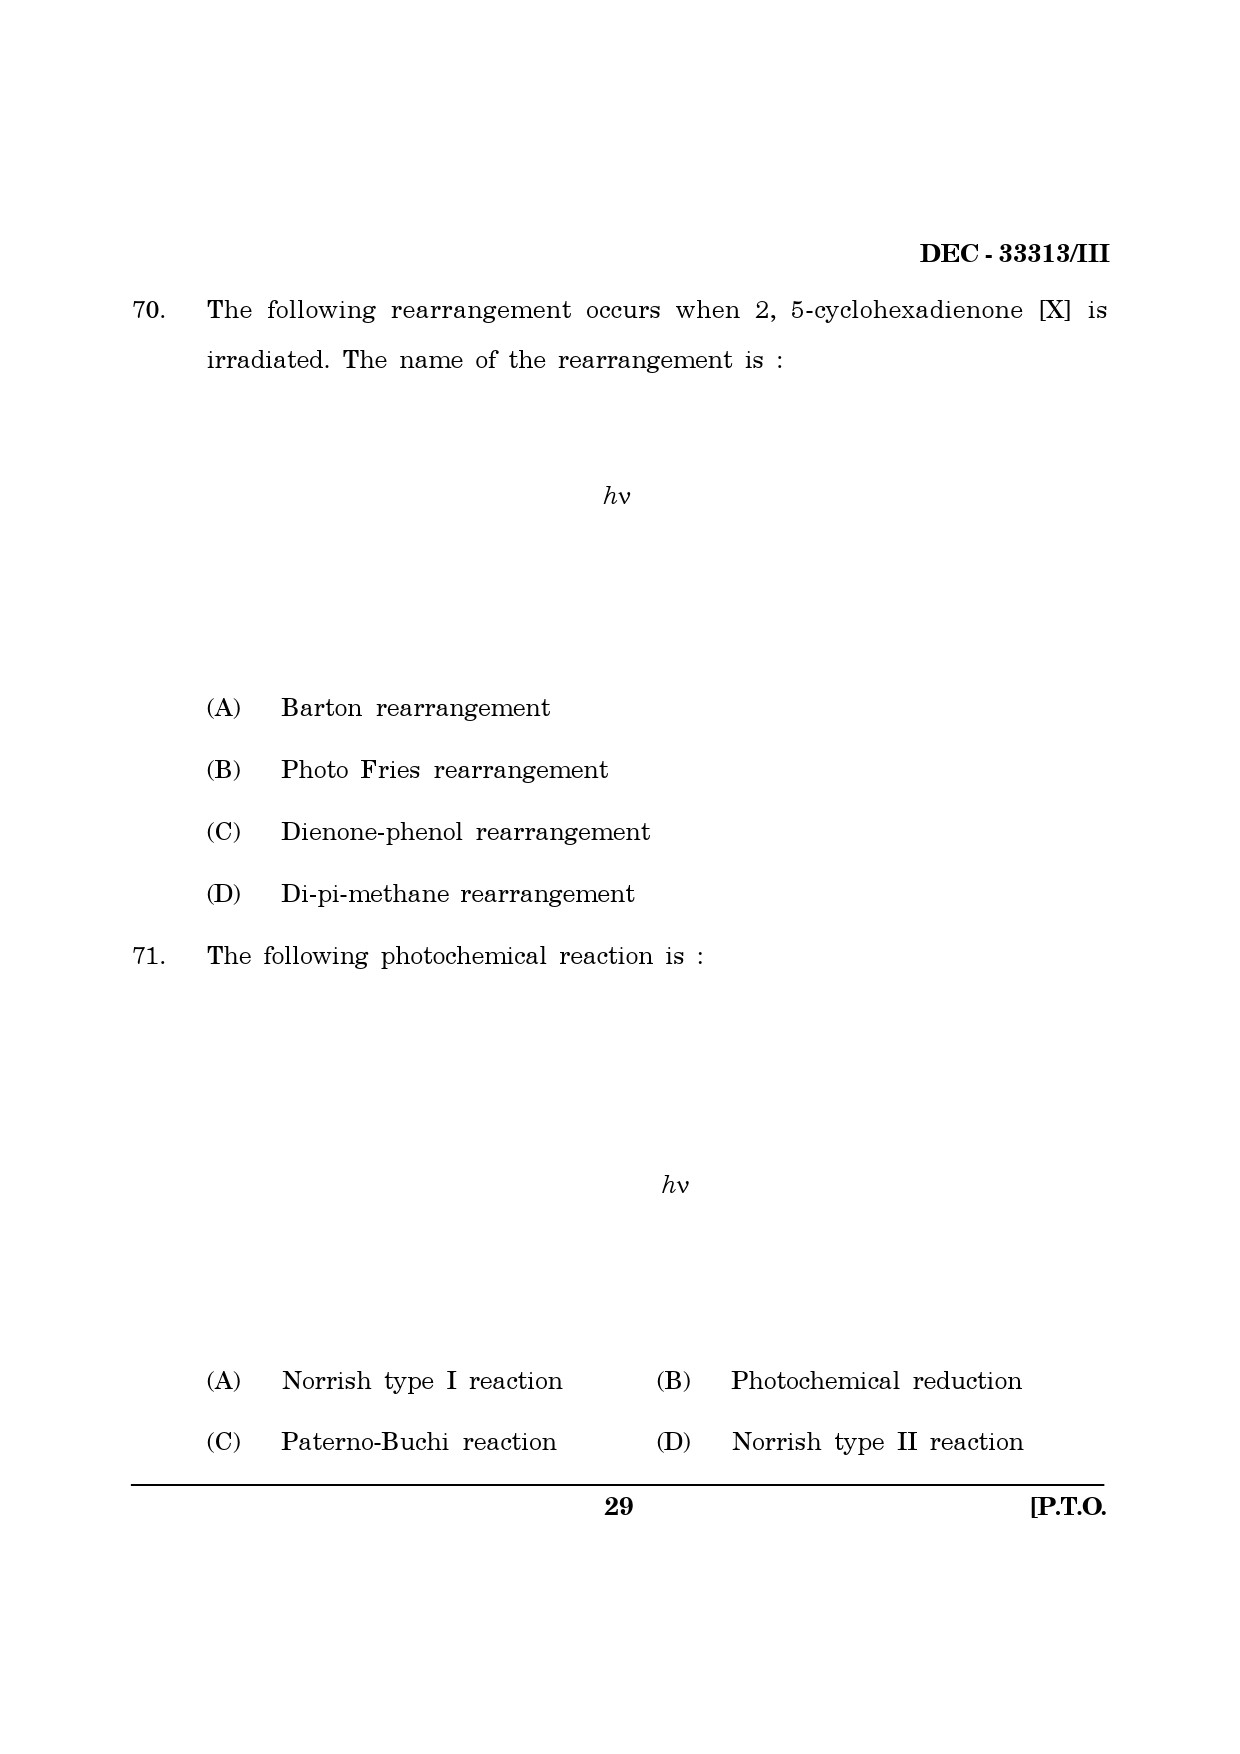 Maharashtra SET Chemical Sciences Question Paper III December 2013 28